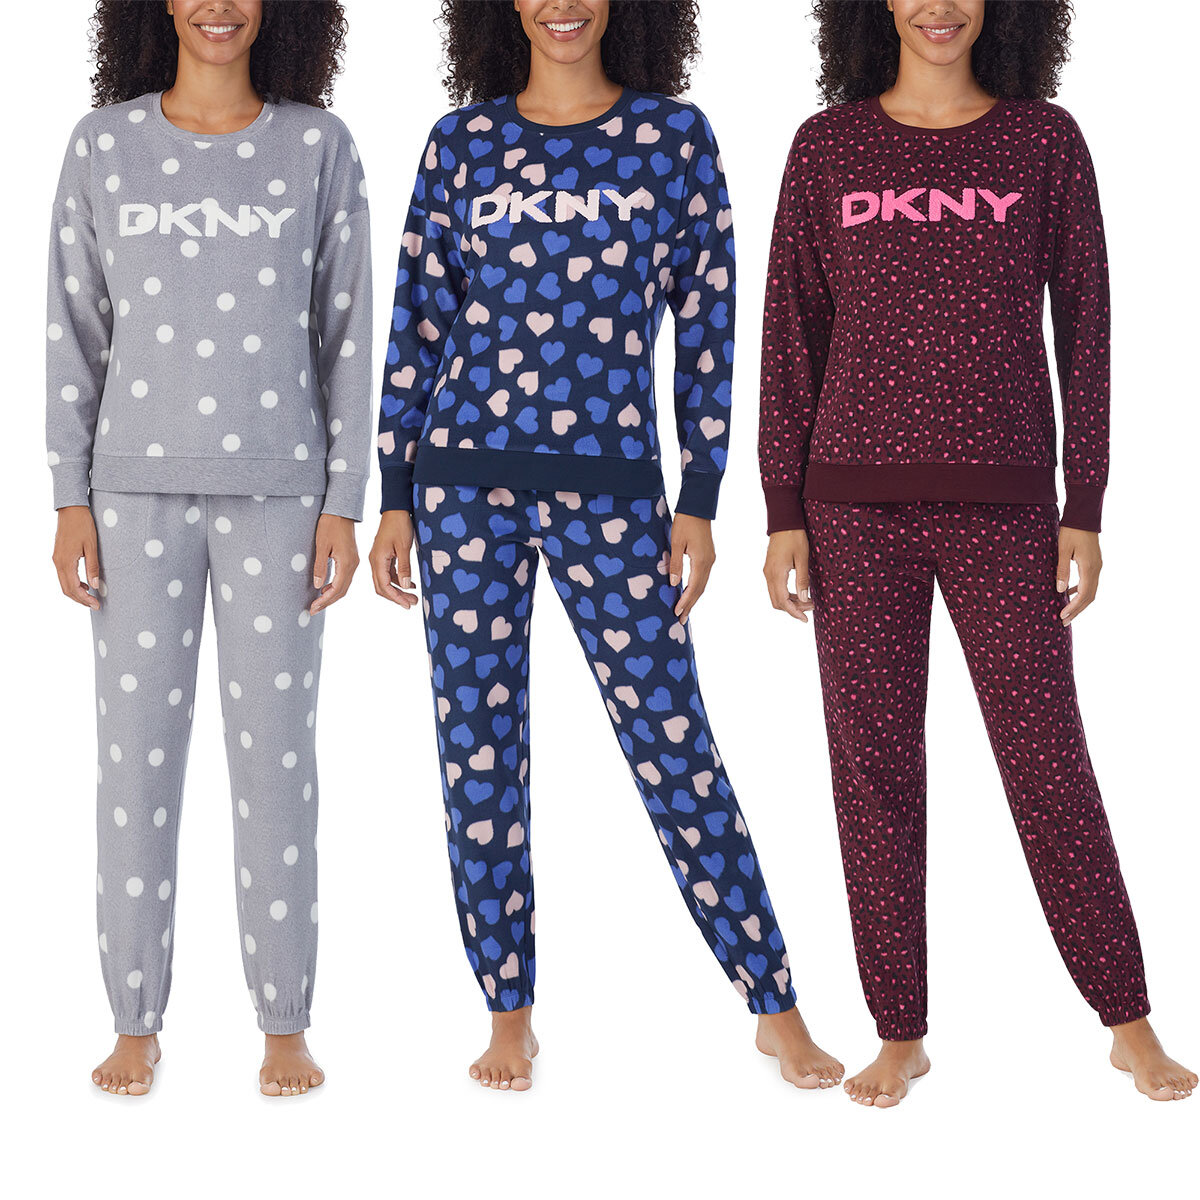  DKNY Girls' Leggings Set - 2 Piece Fleece Pullover